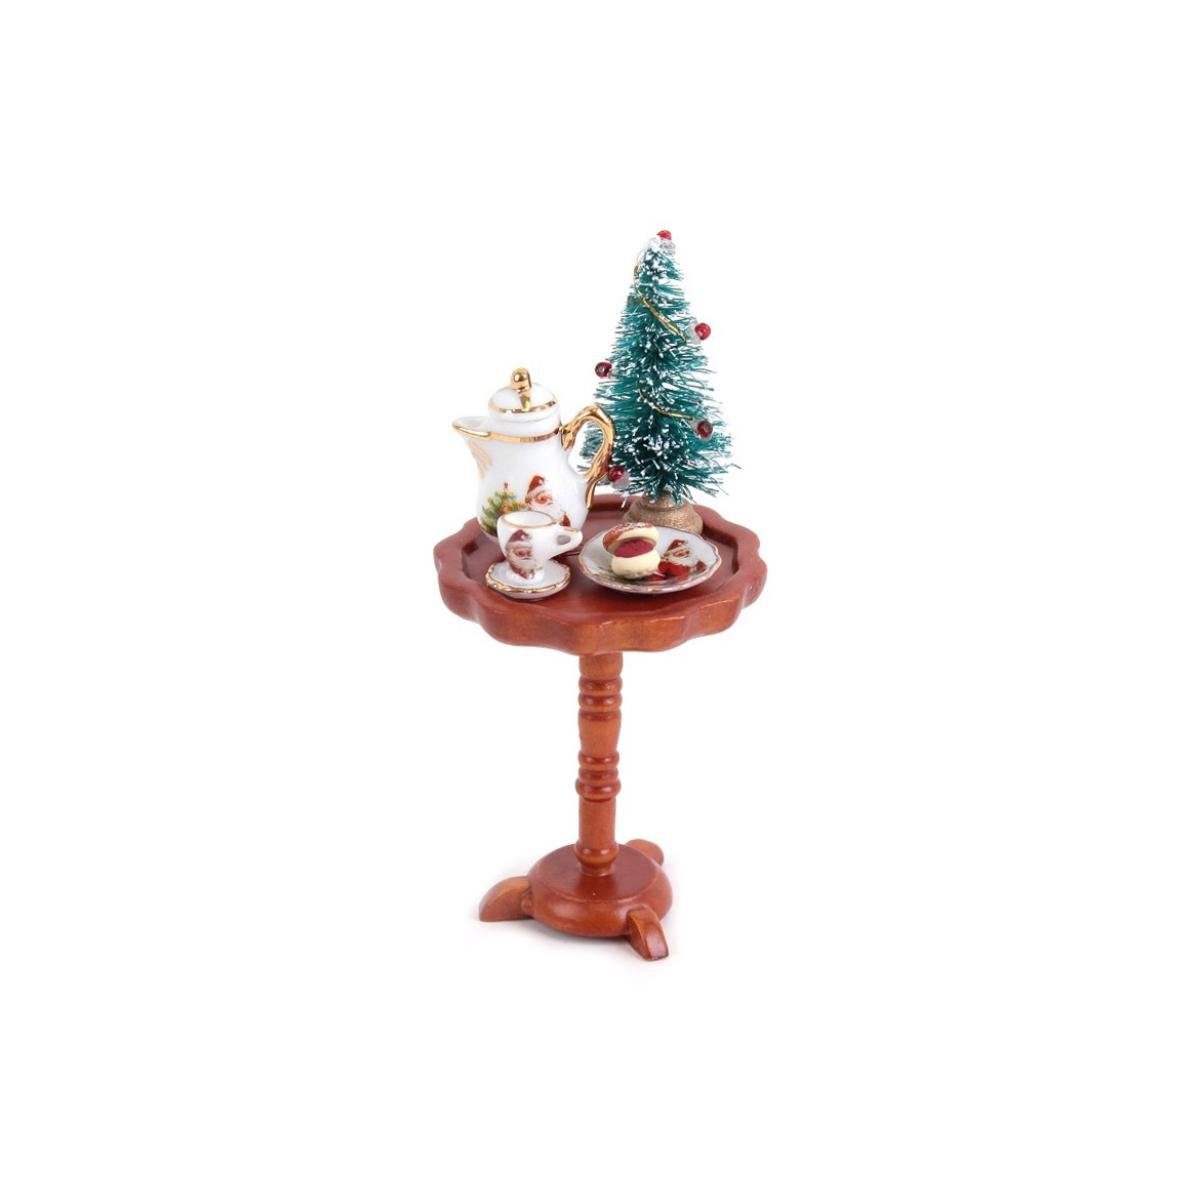 Reutter Porzellan Dekofigur - Weihnachtstisch, 001.858/4 Miniatur